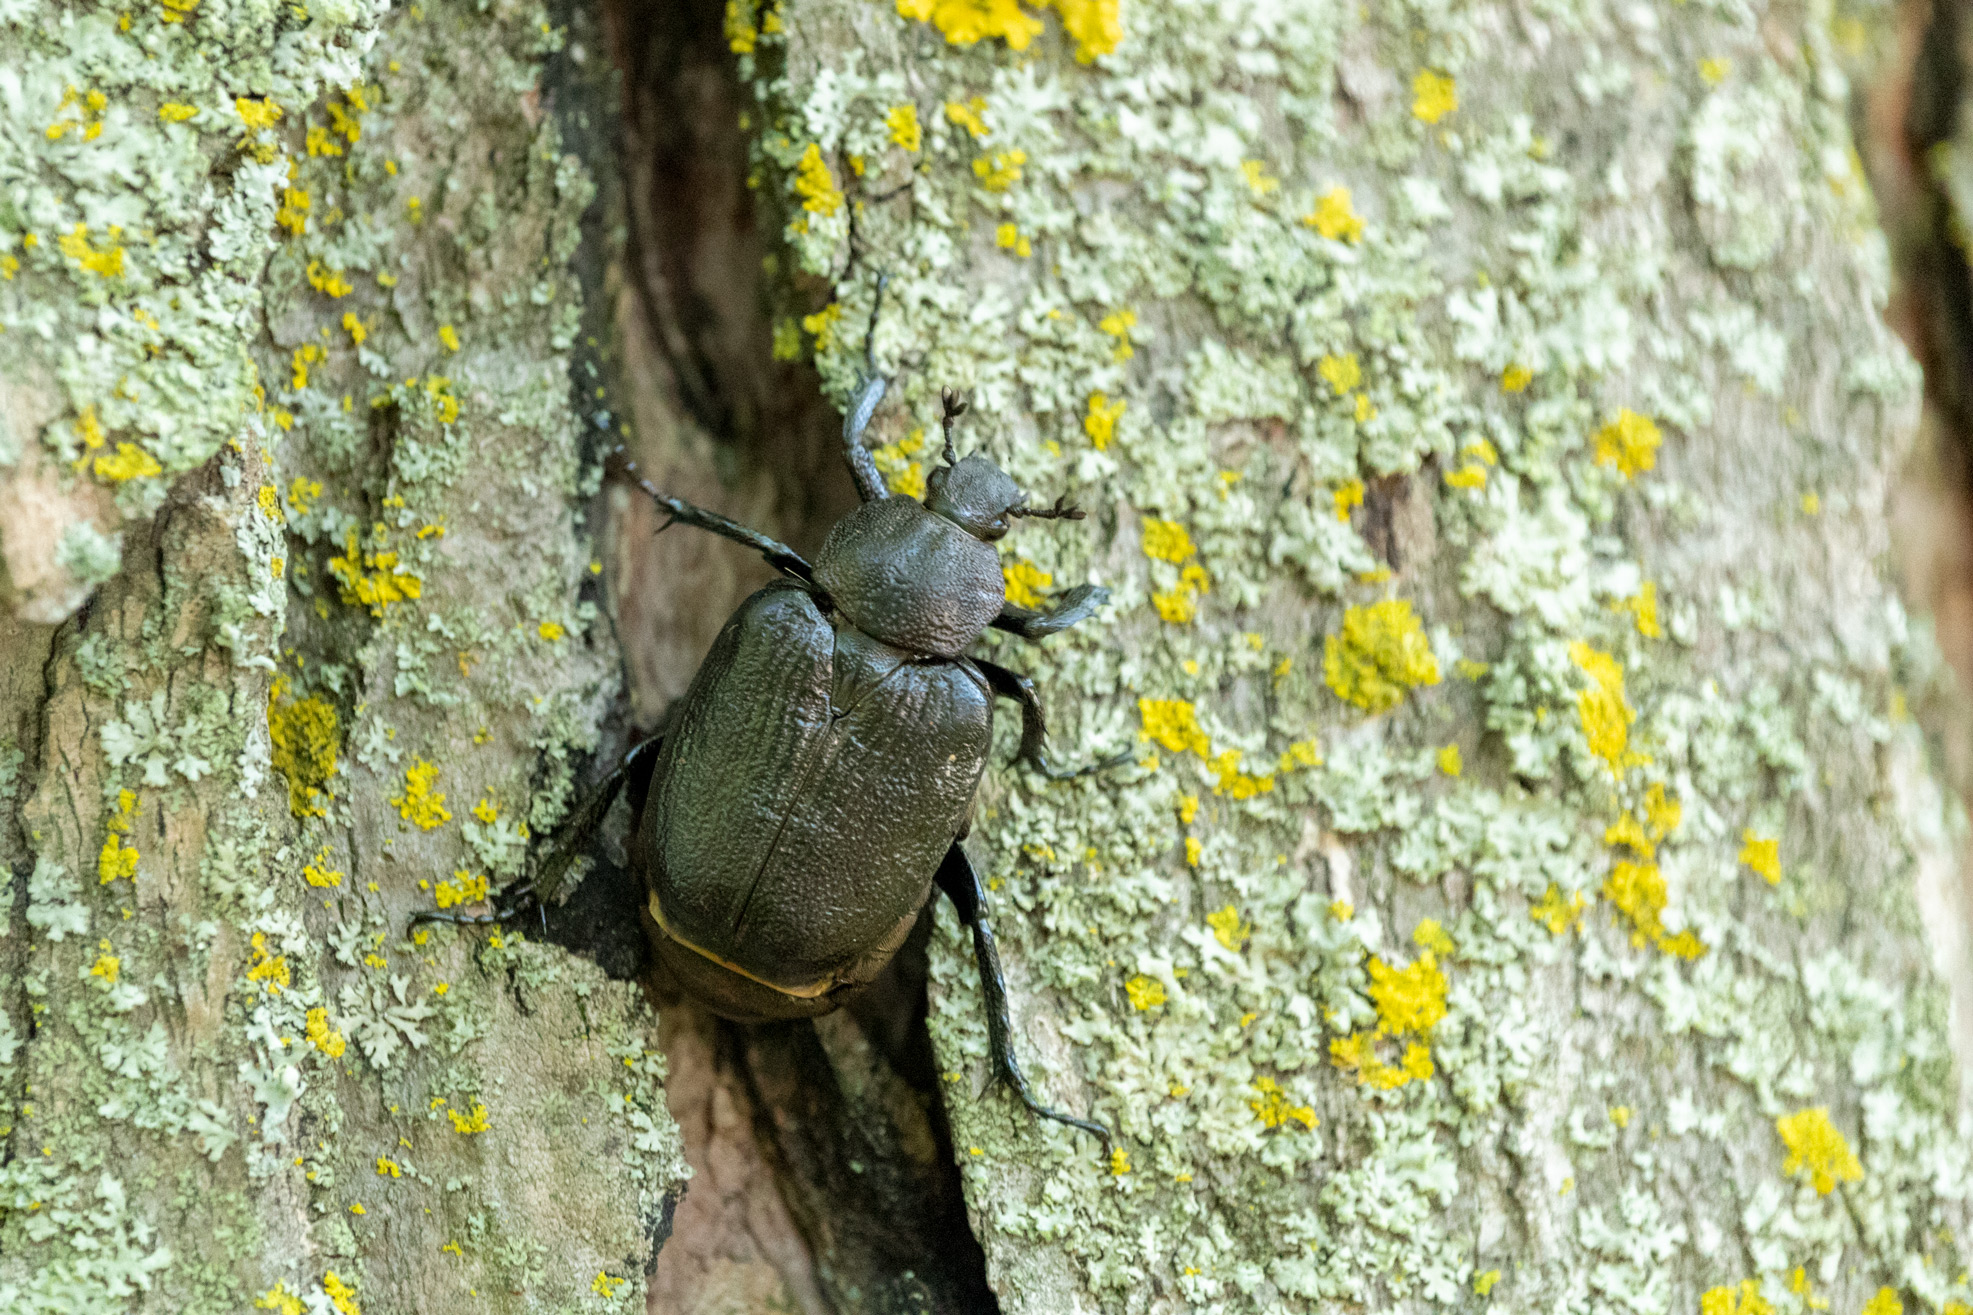 Large black beetle climbing on mossy tree bark